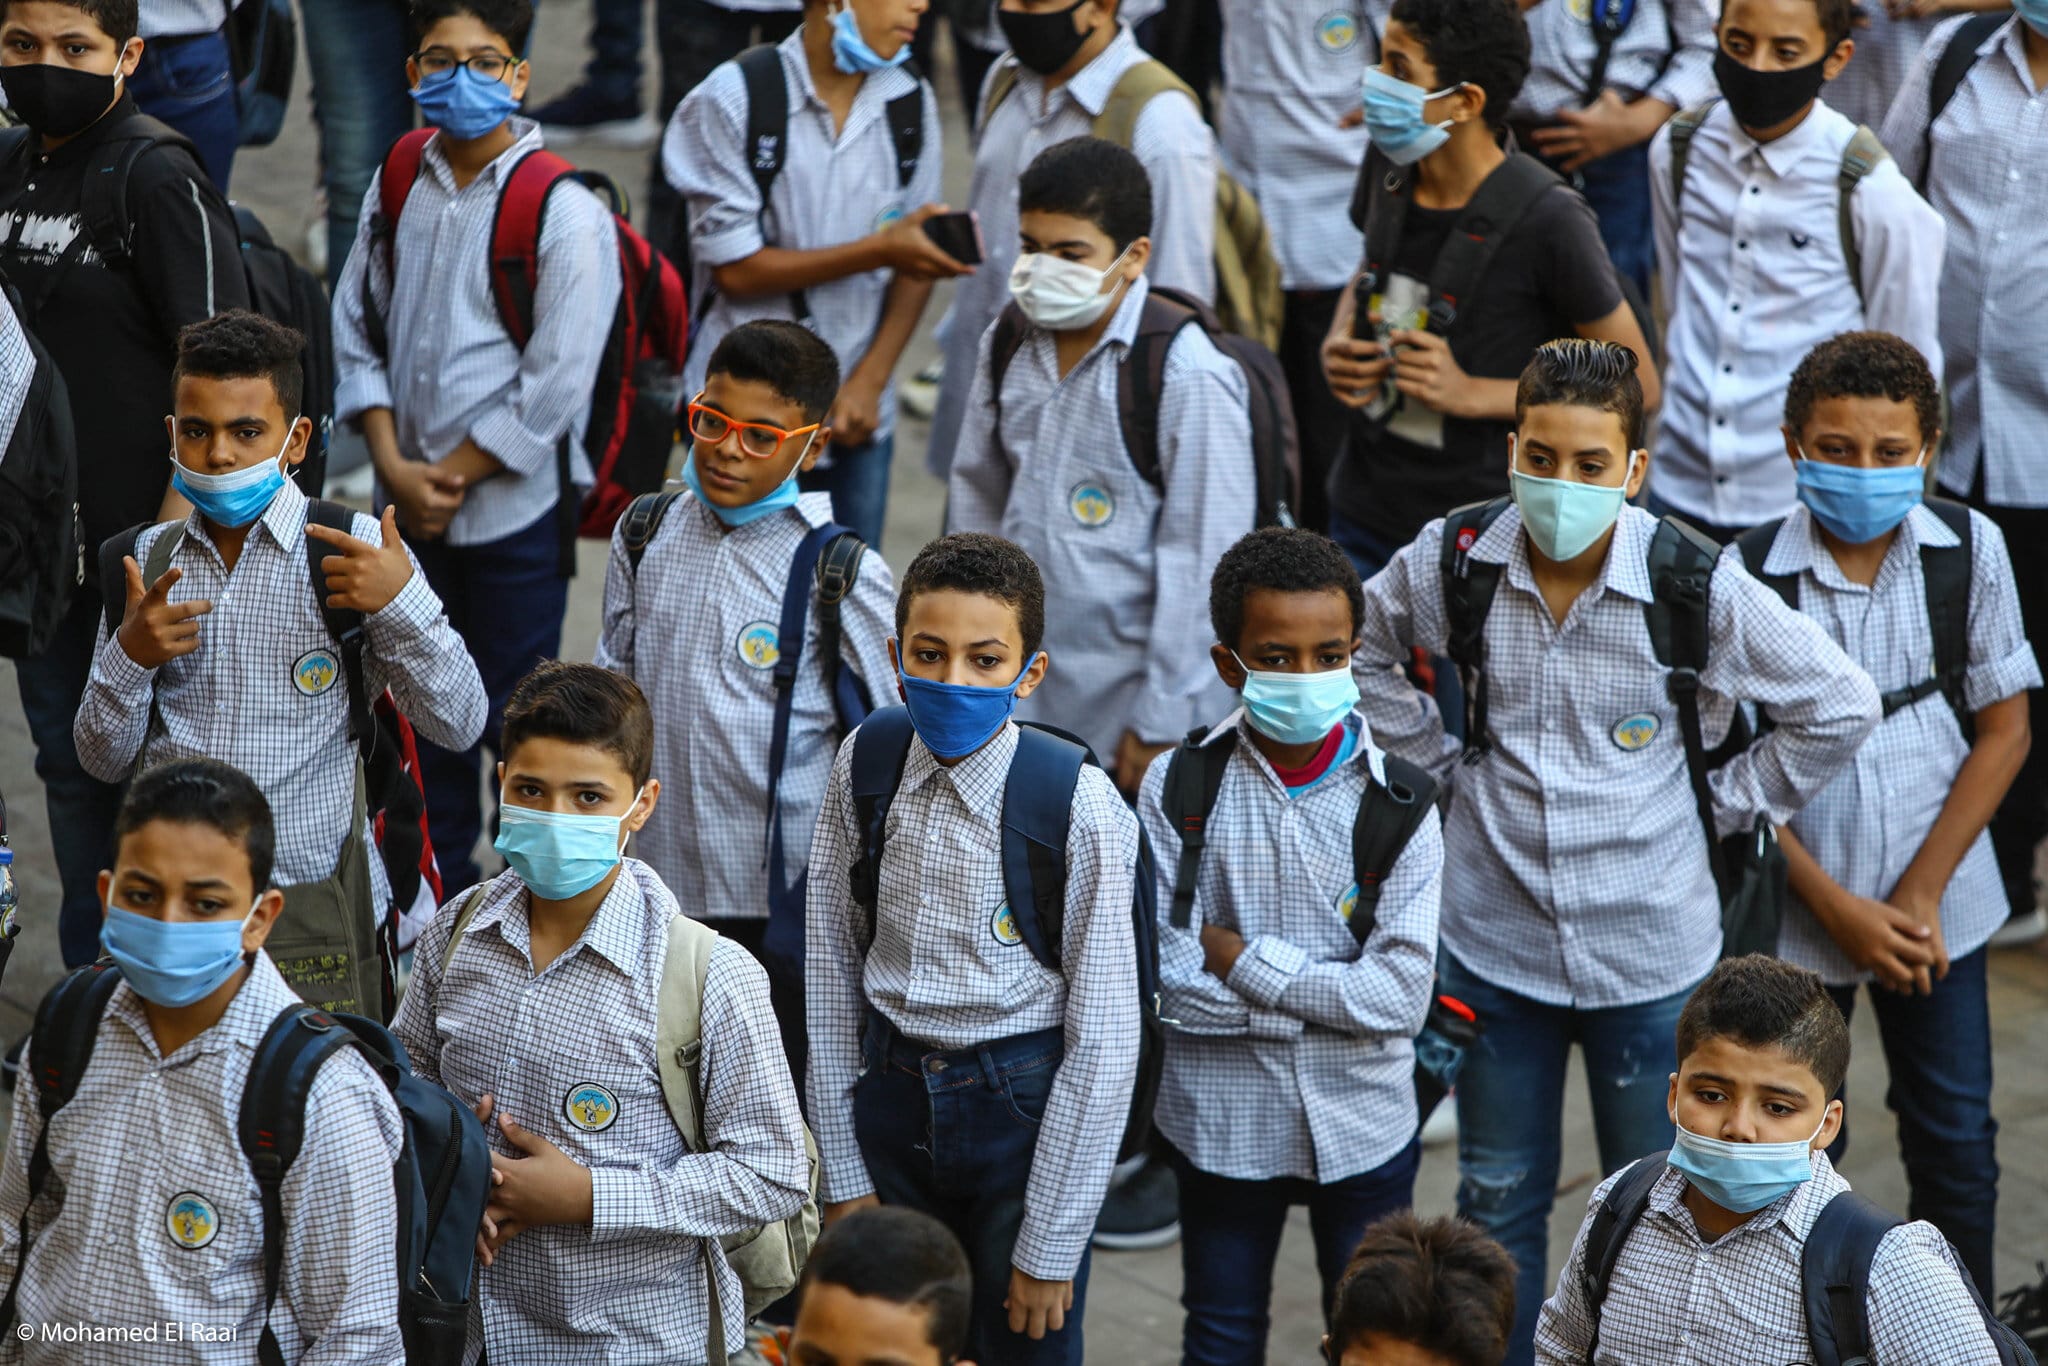 Egyptian students wearing masks